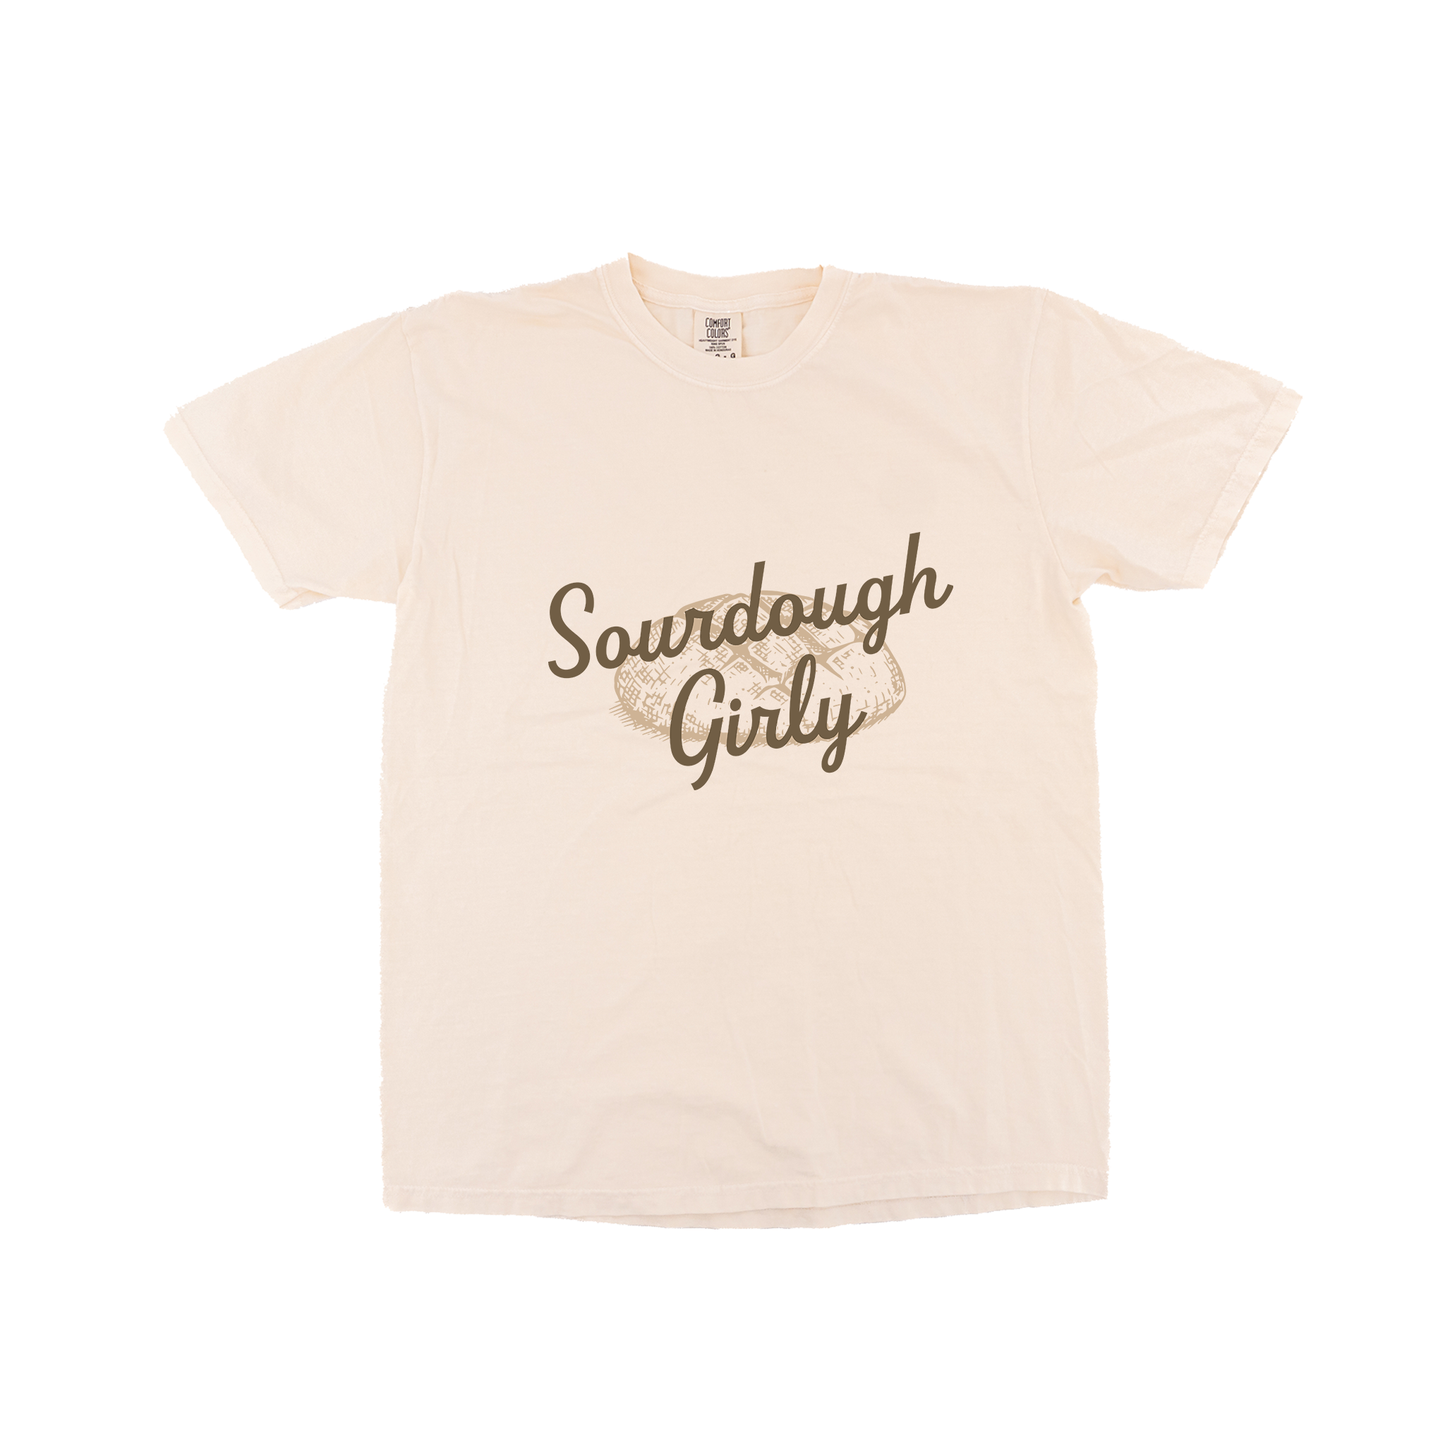 Sourdough Girly - Tee (Vintage Natural, Short Sleeve)